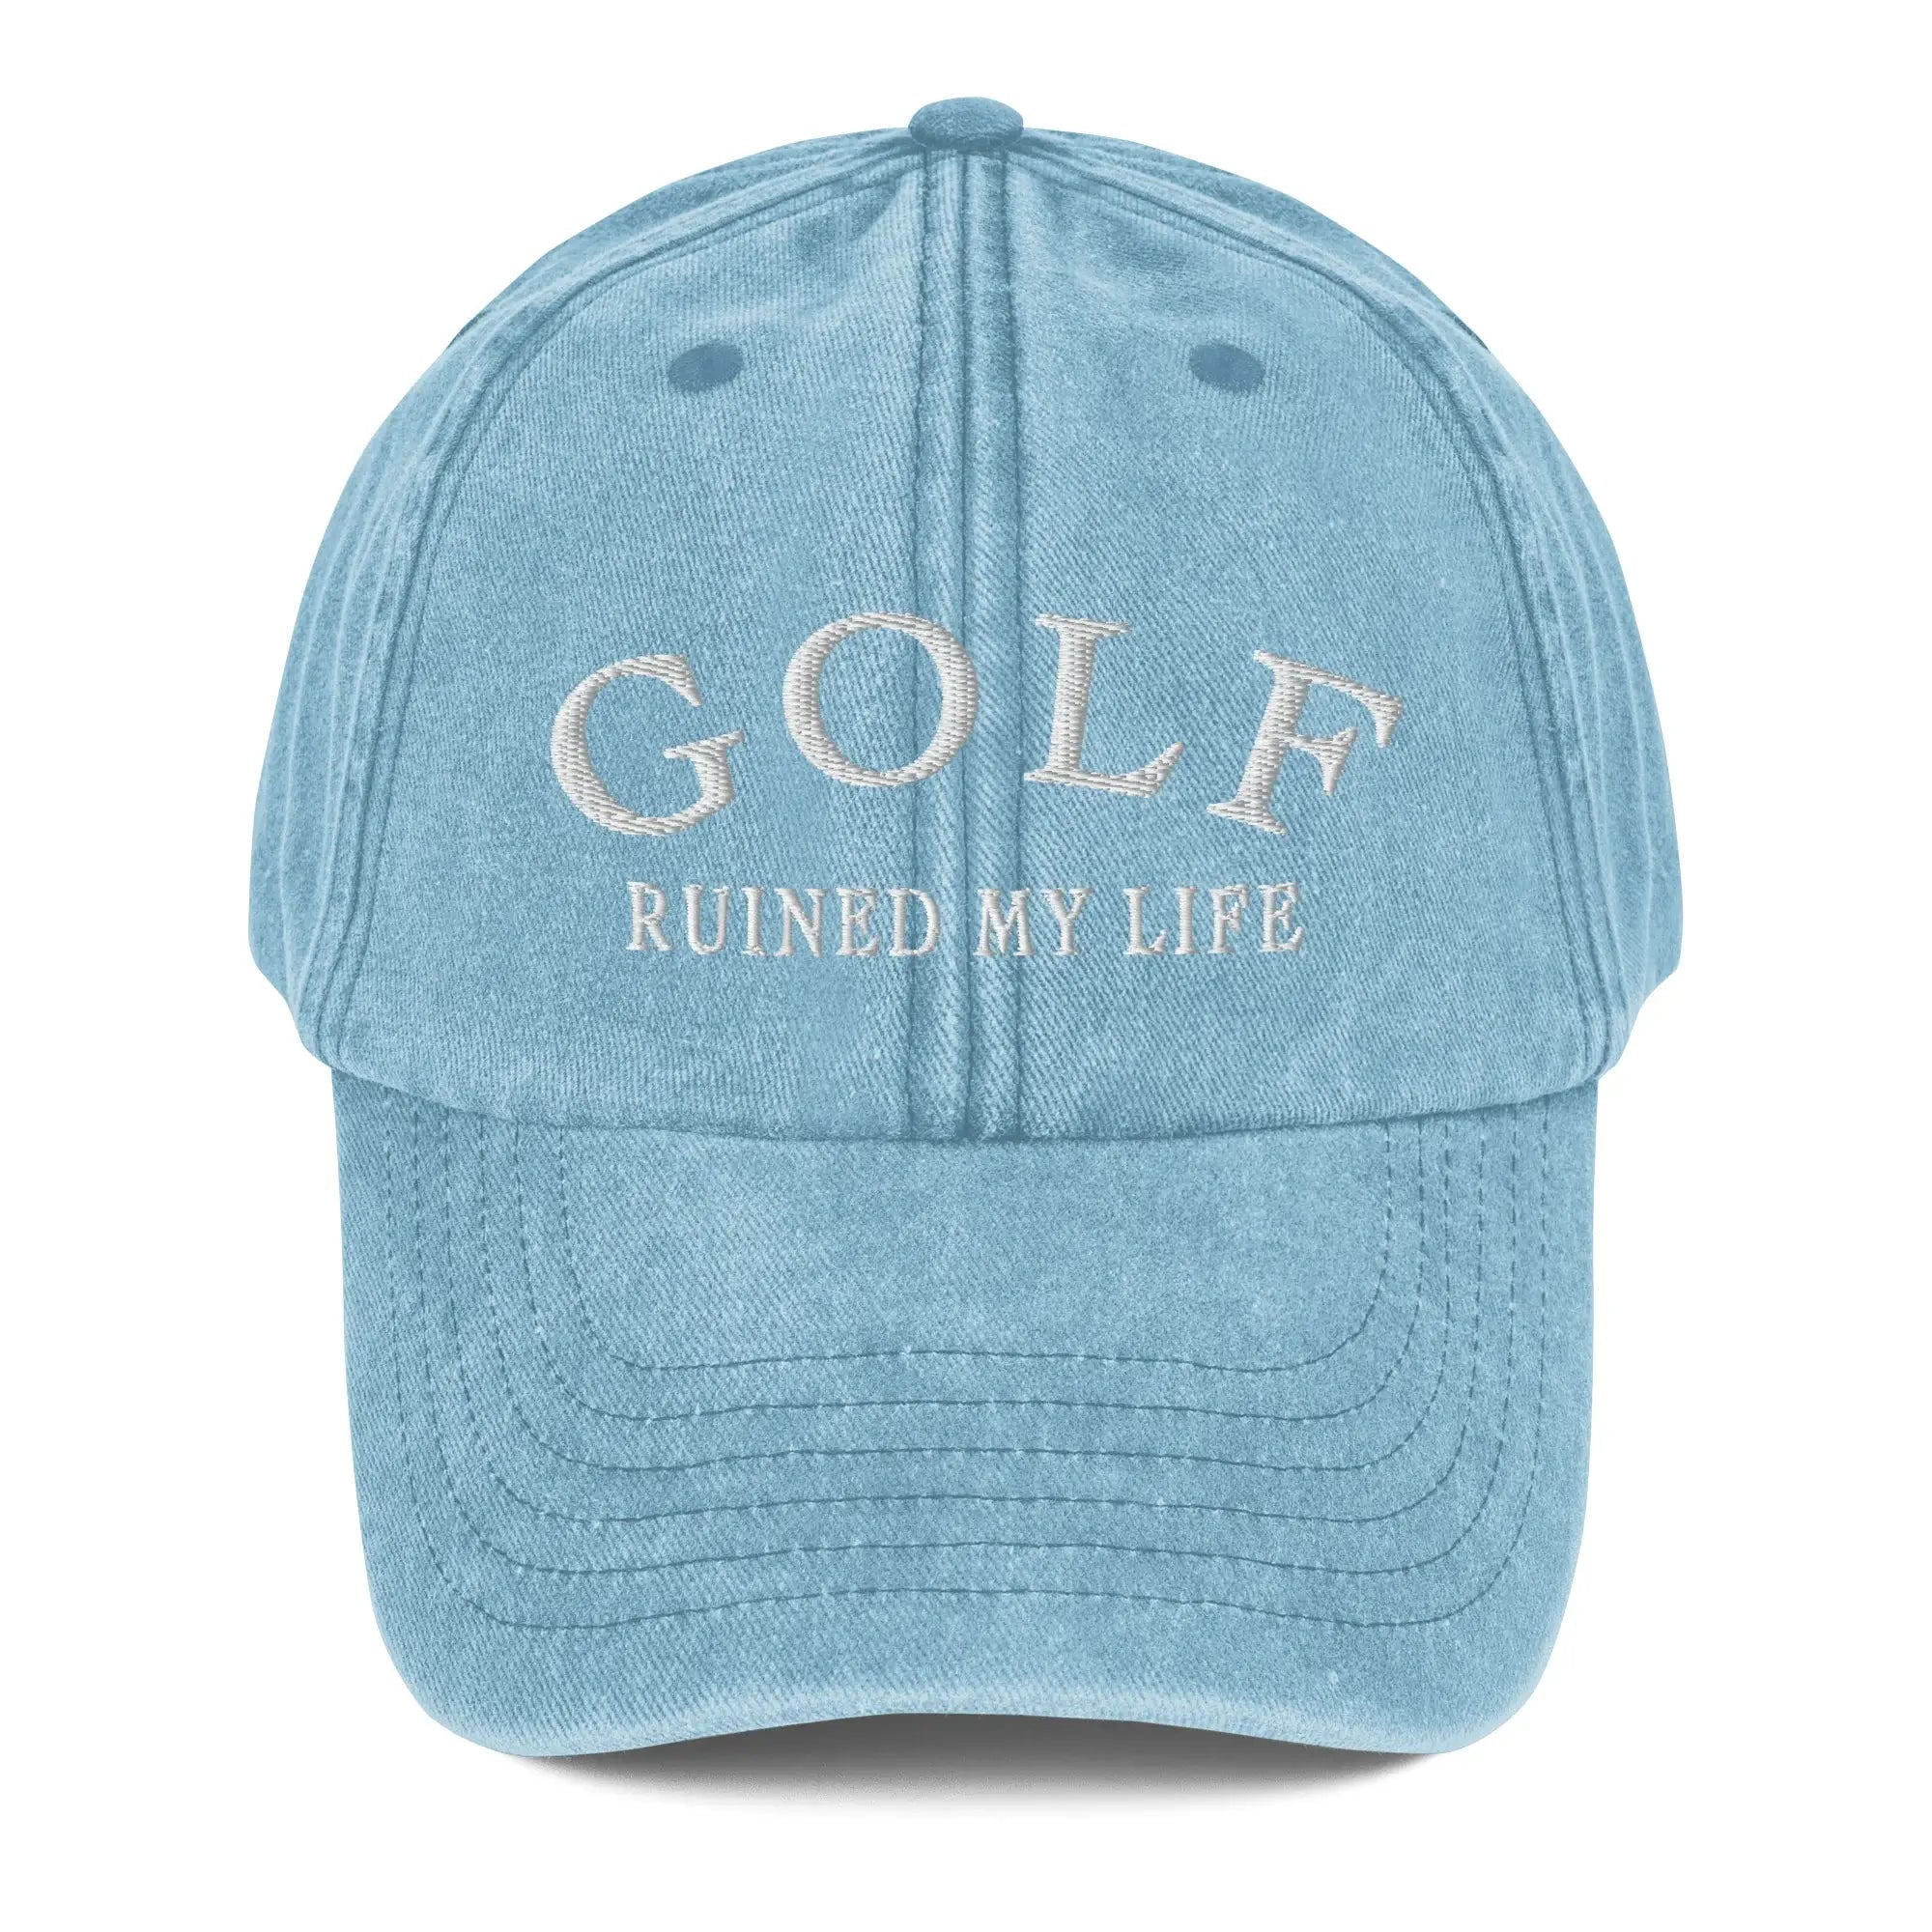 Golf Ruined My Life {Vintage Cap}